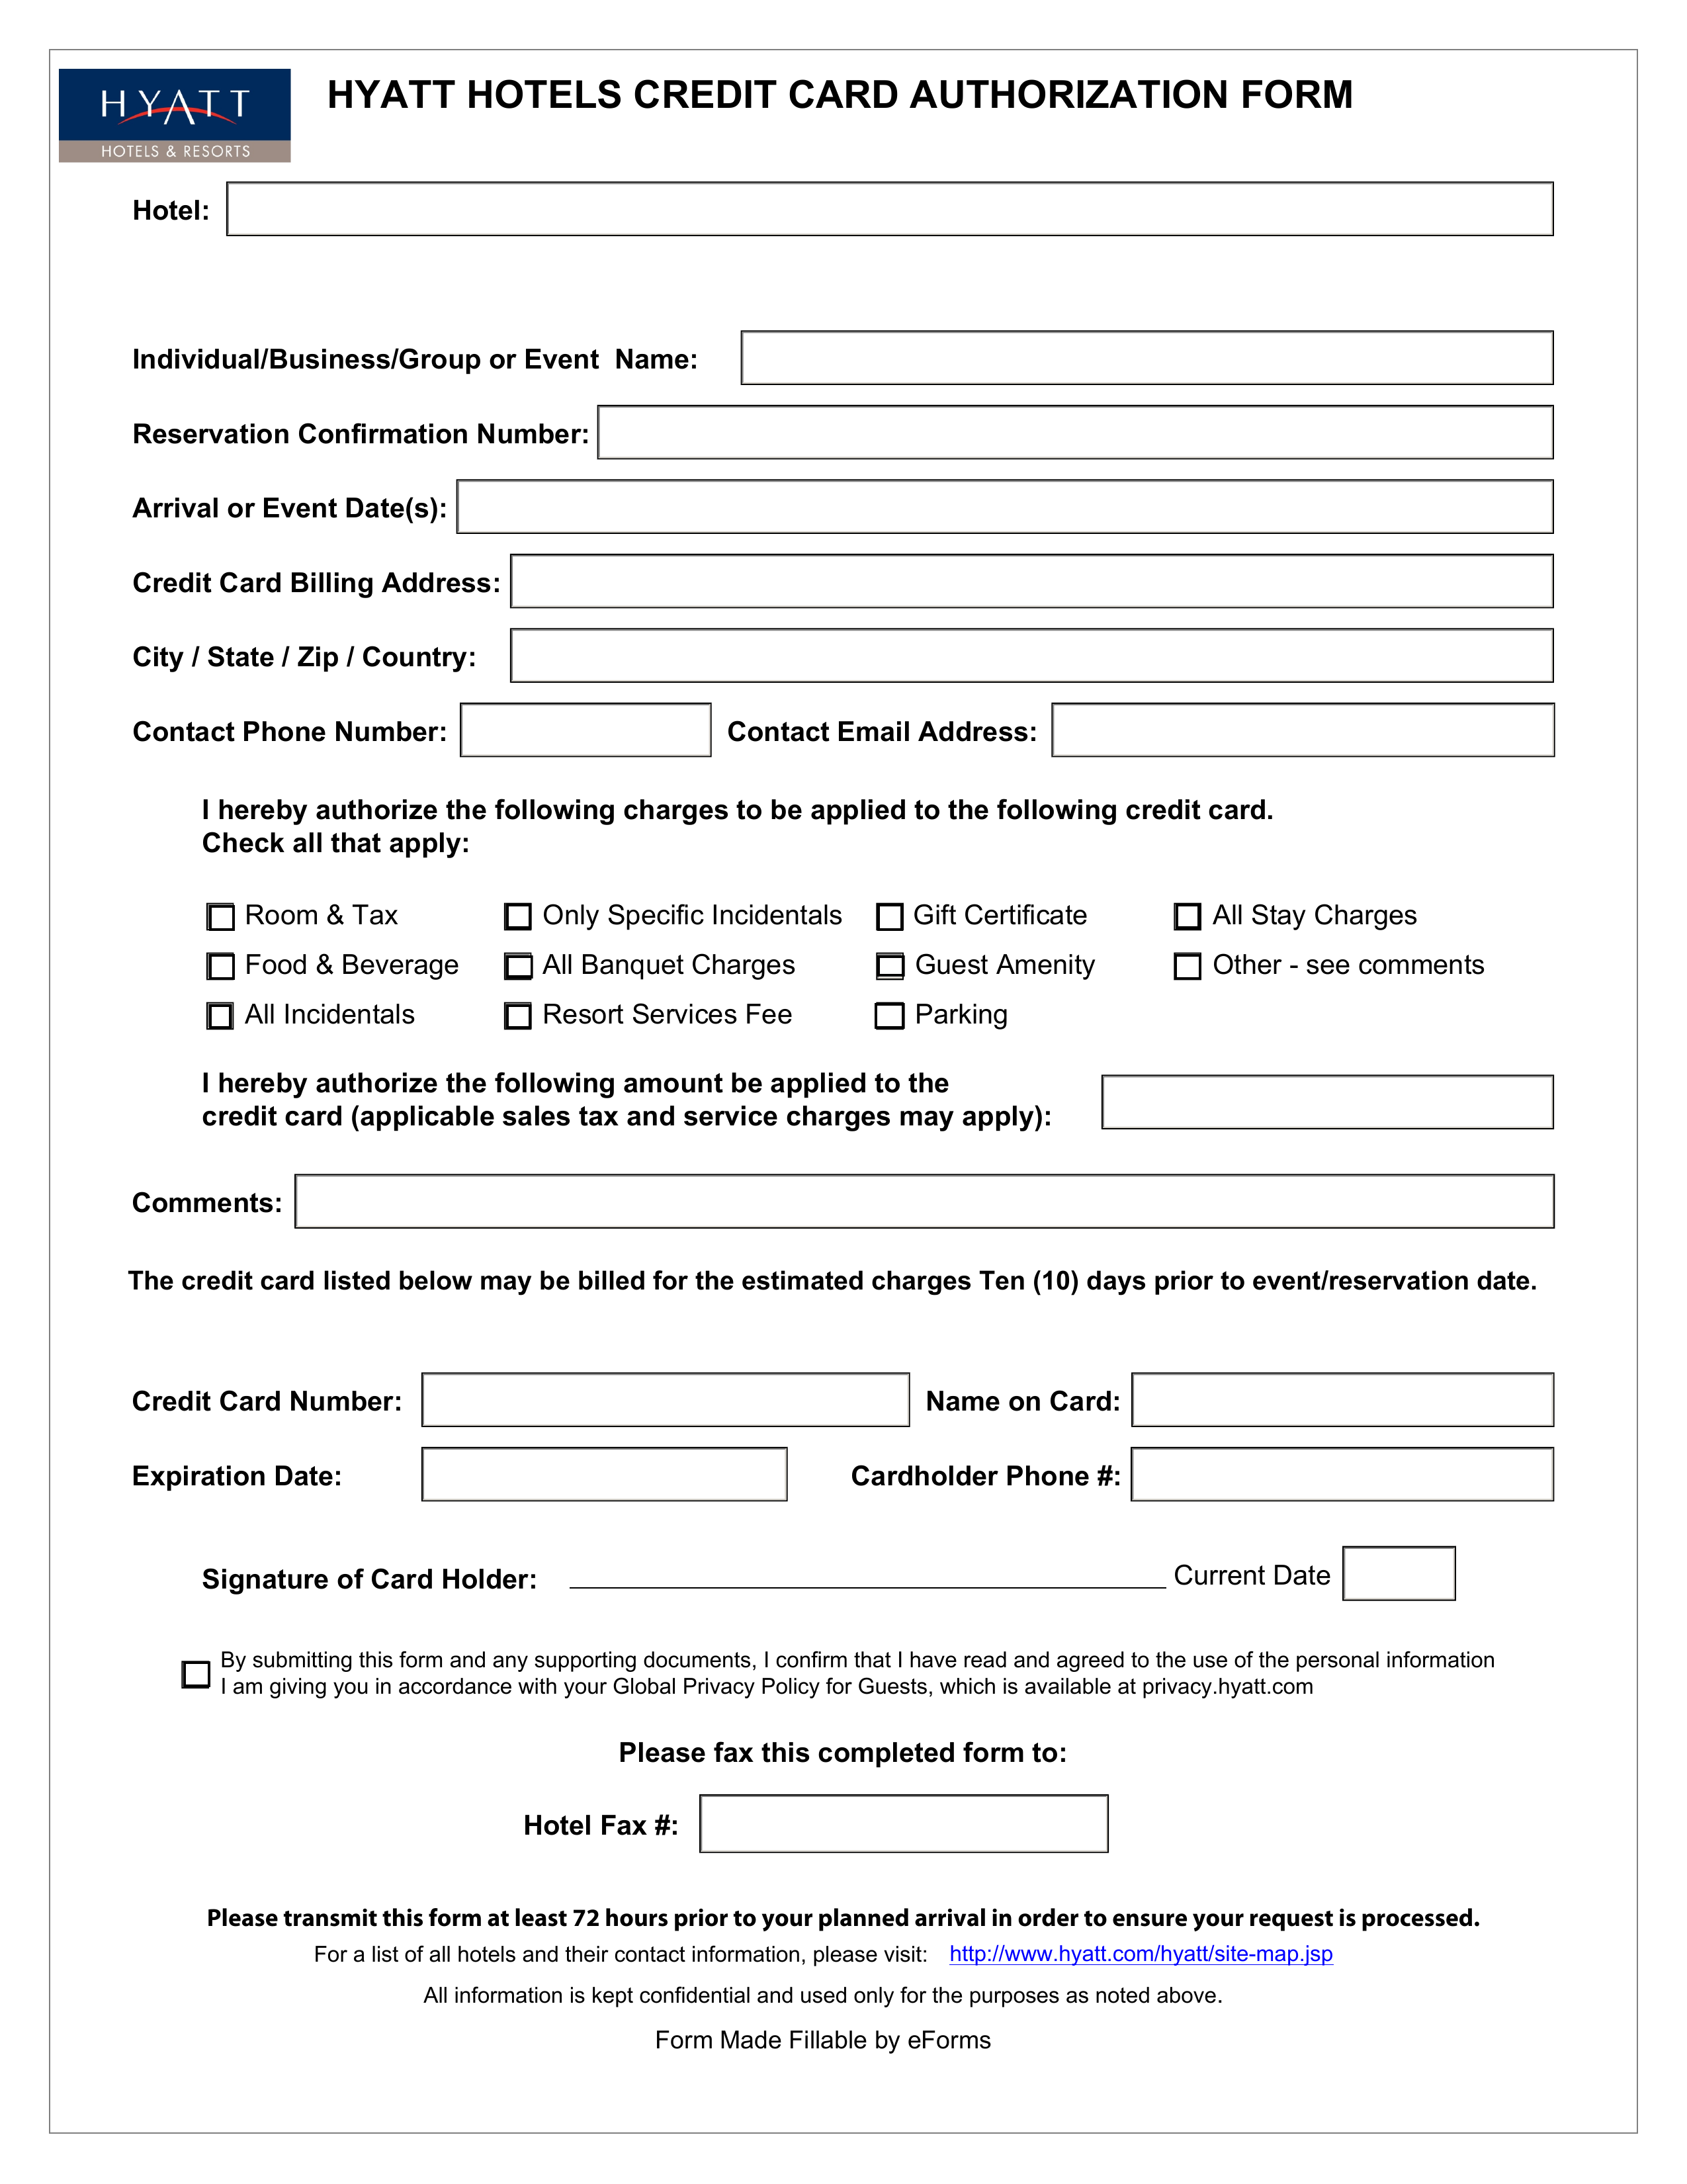 Free Hyatt Credit Card Authorization Form PDF EForms